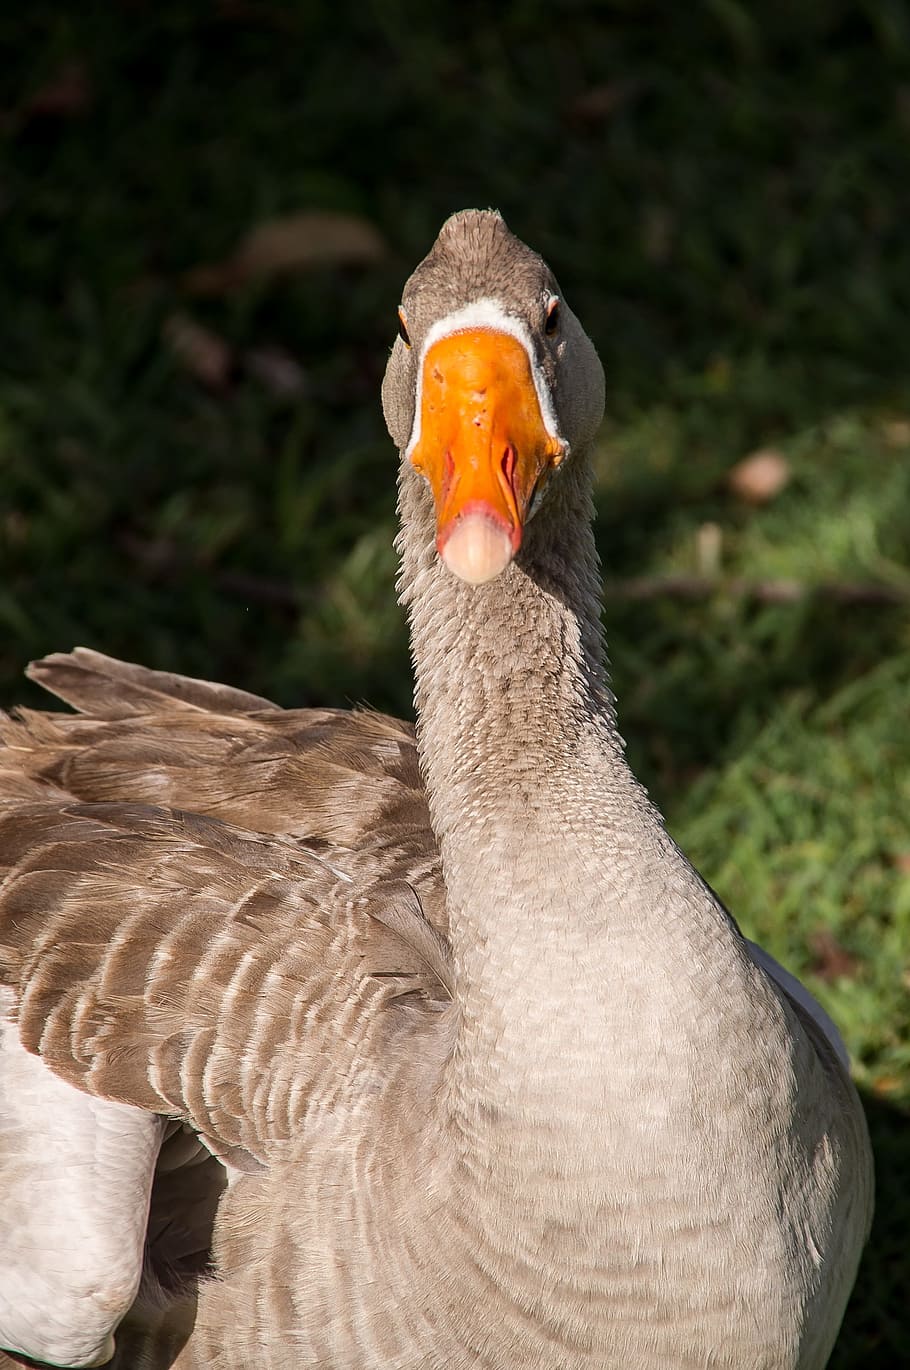 Greylag Goose, Bird, Waterbird, goose, grey, orange beak, feathers, grass, australia, animals in the wild